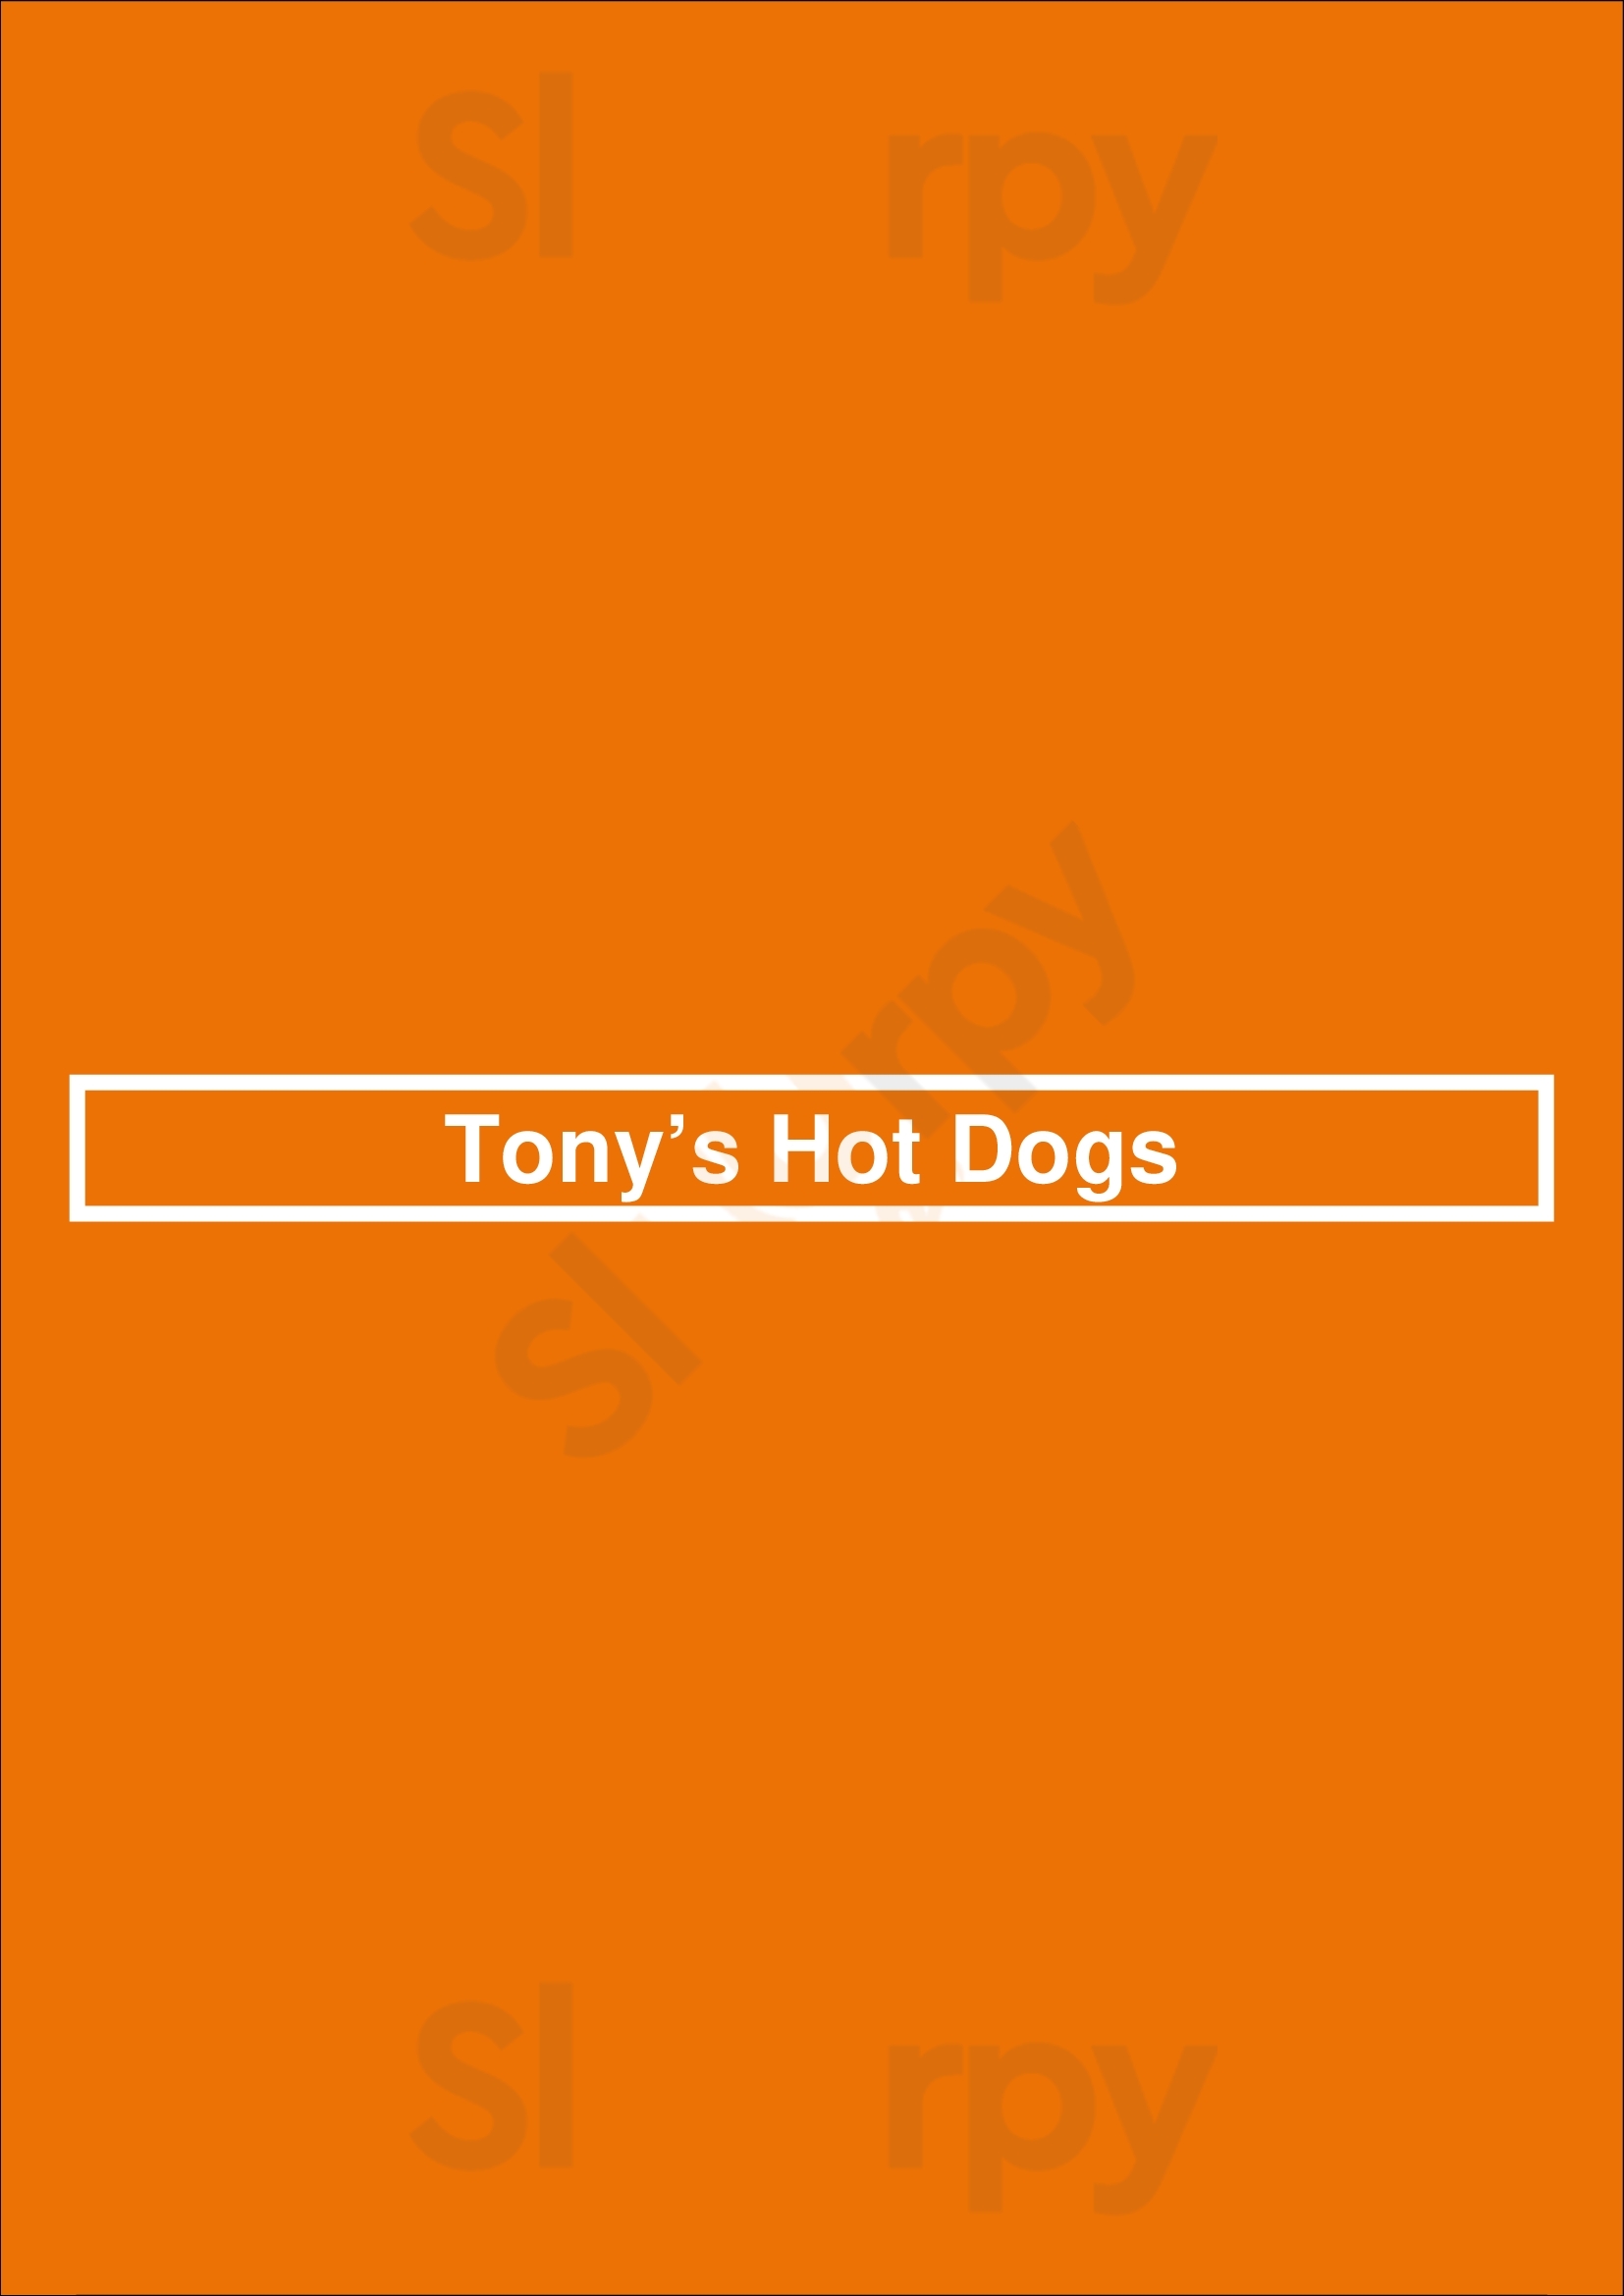 Tony’s Hot Dogs Newark Menu - 1